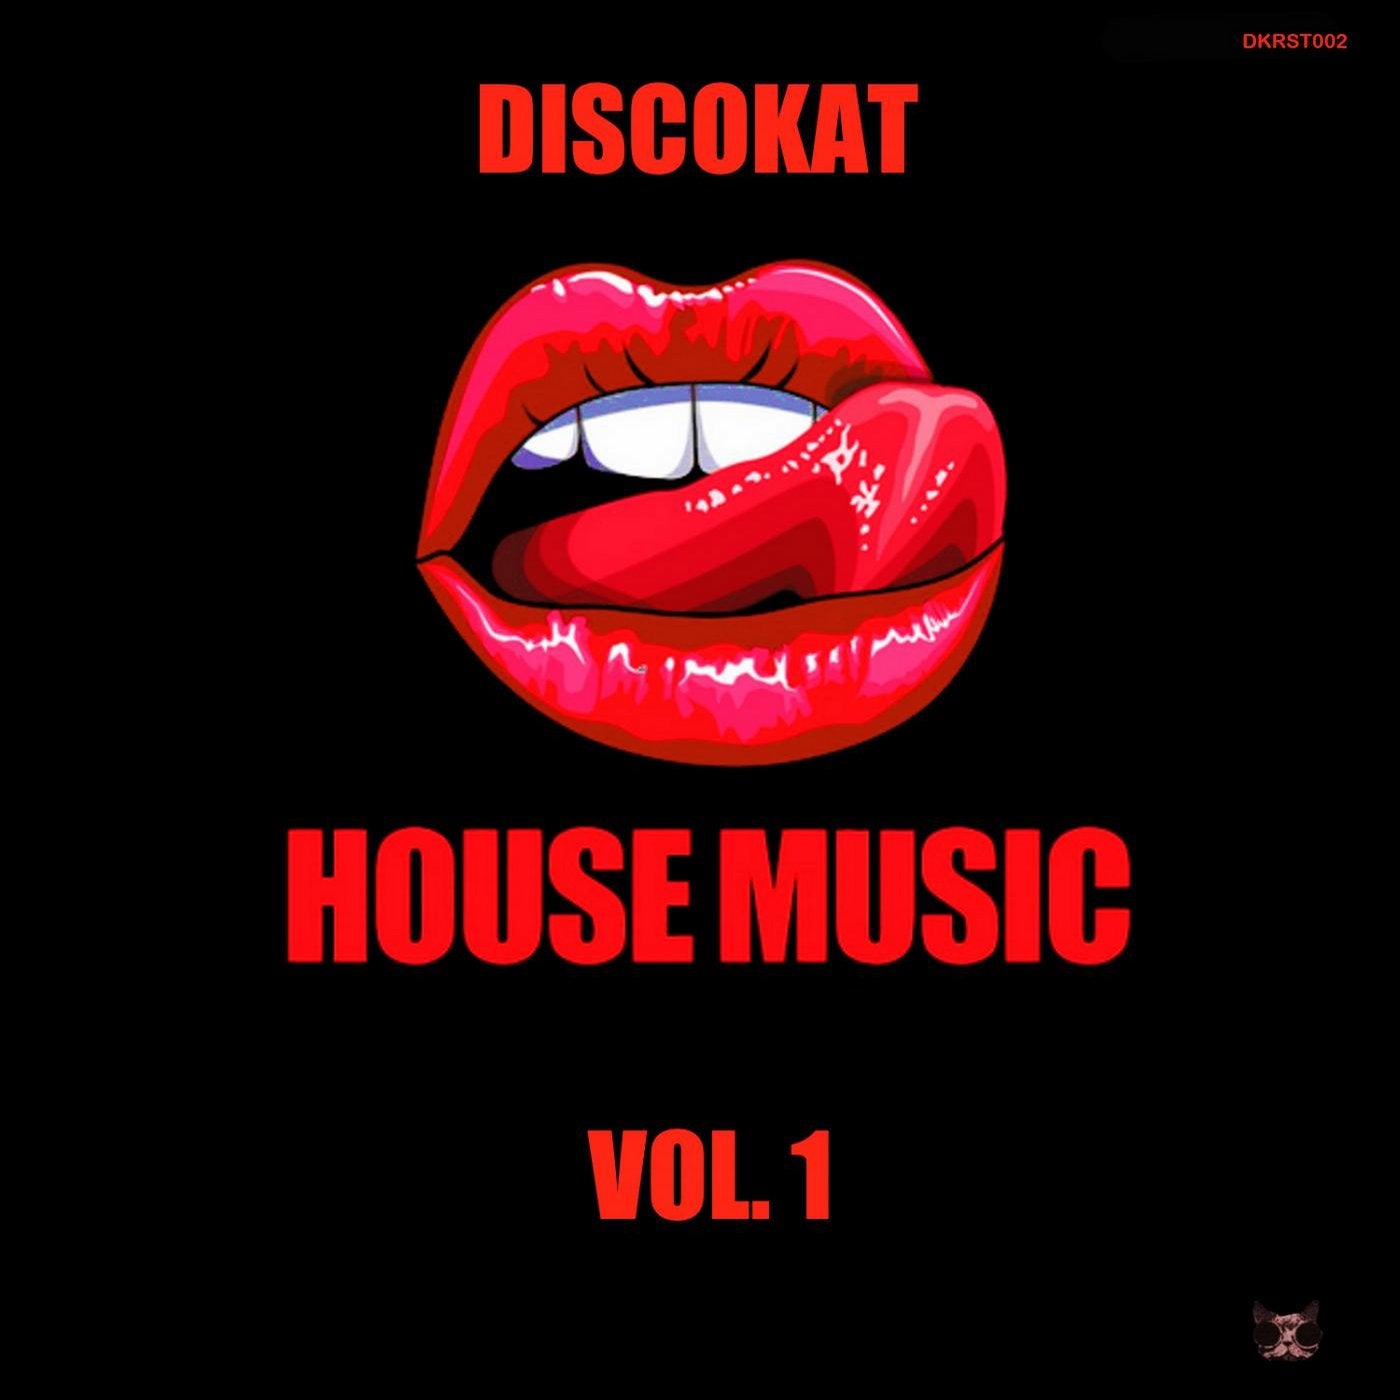 DISCOKAT HOUSE MUSIC VOL. 2